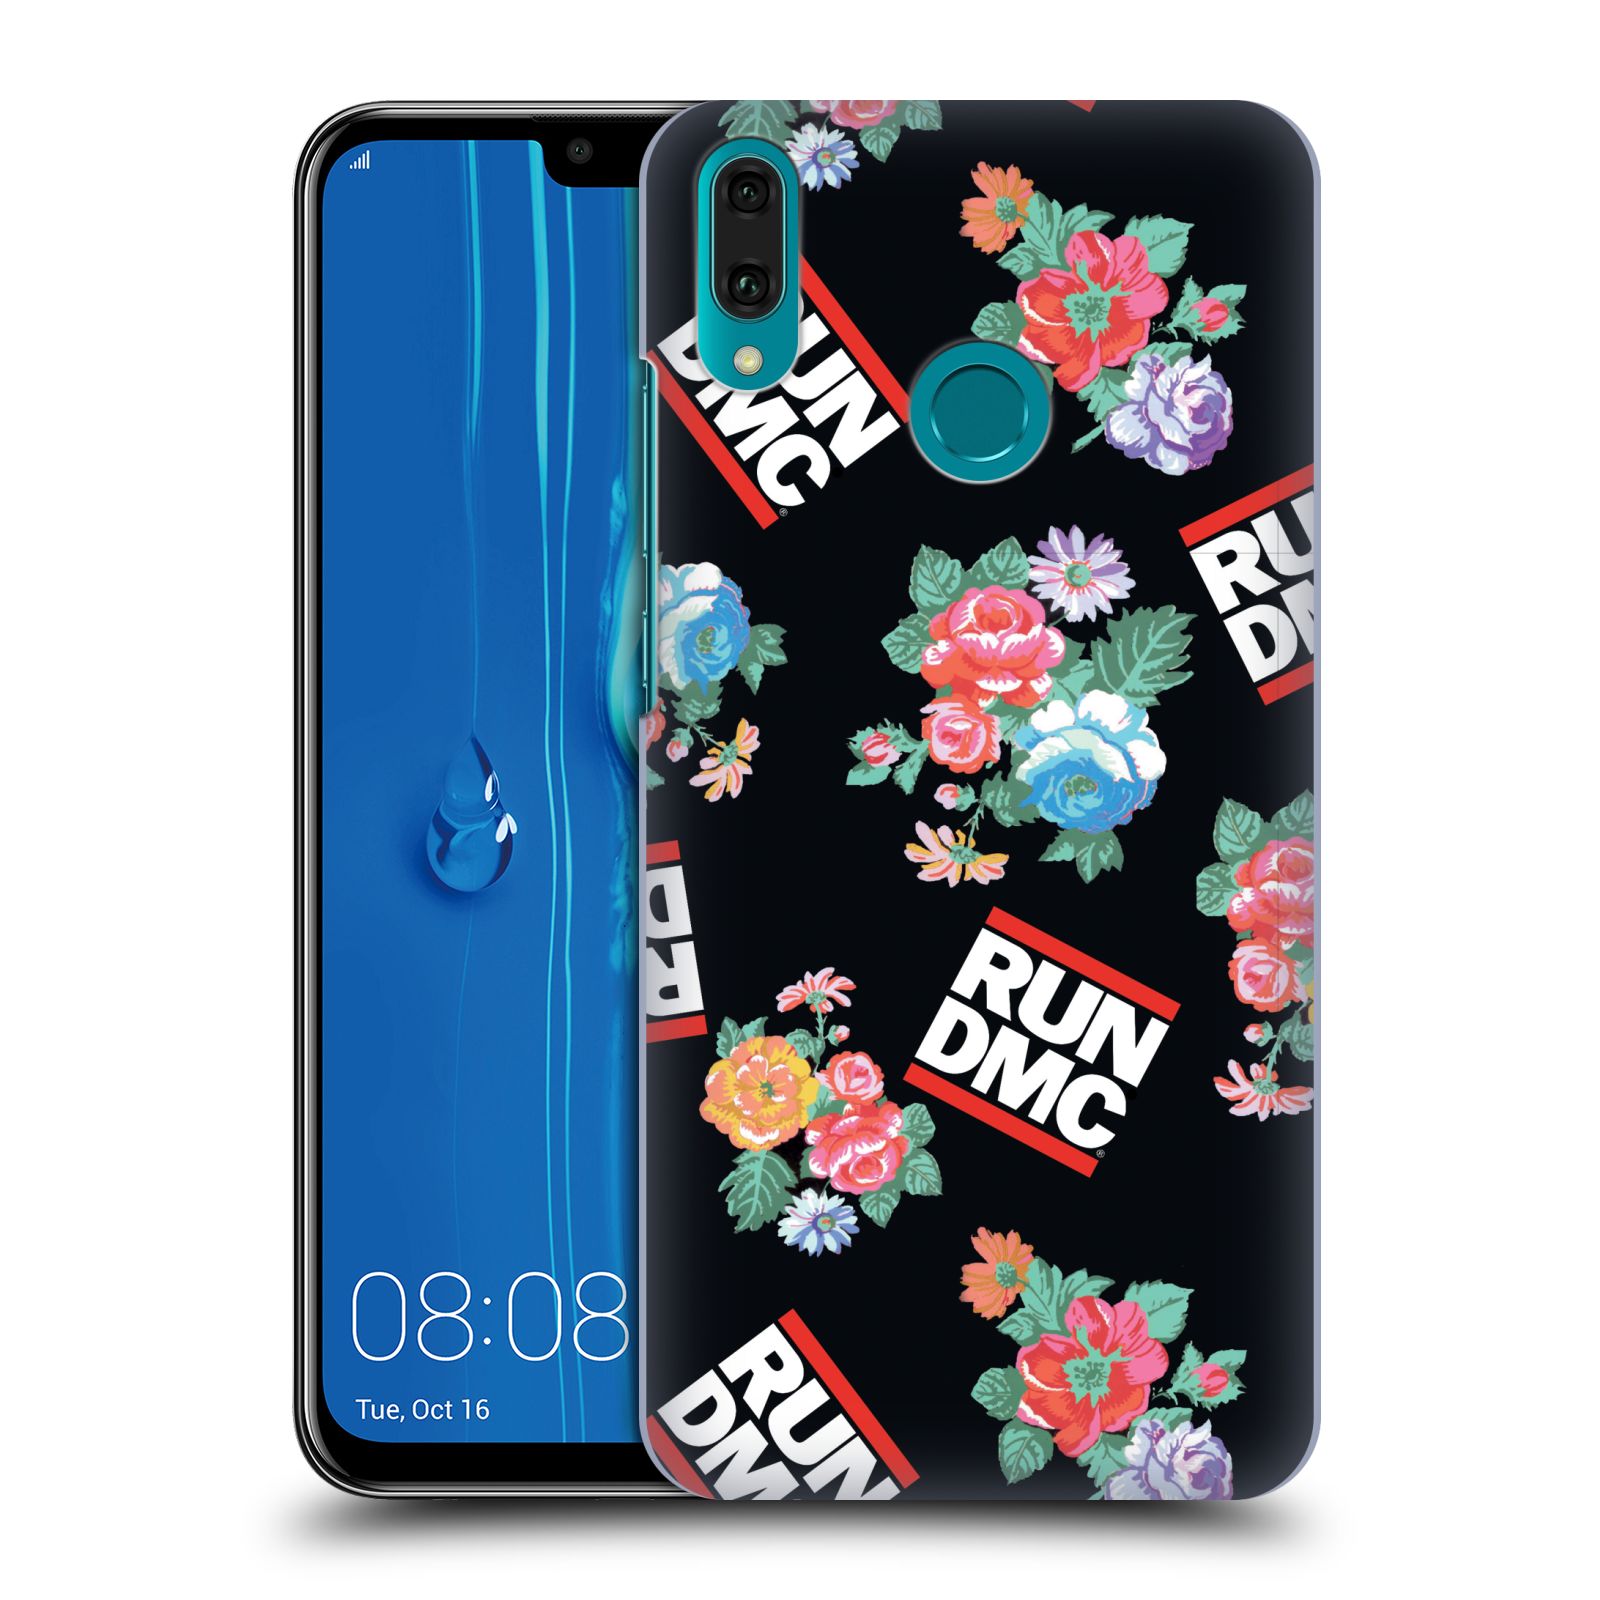 Pouzdro na mobil Huawei Y9 2019 - HEAD CASE - rapová kapela Run DMC květiny černé pozadí